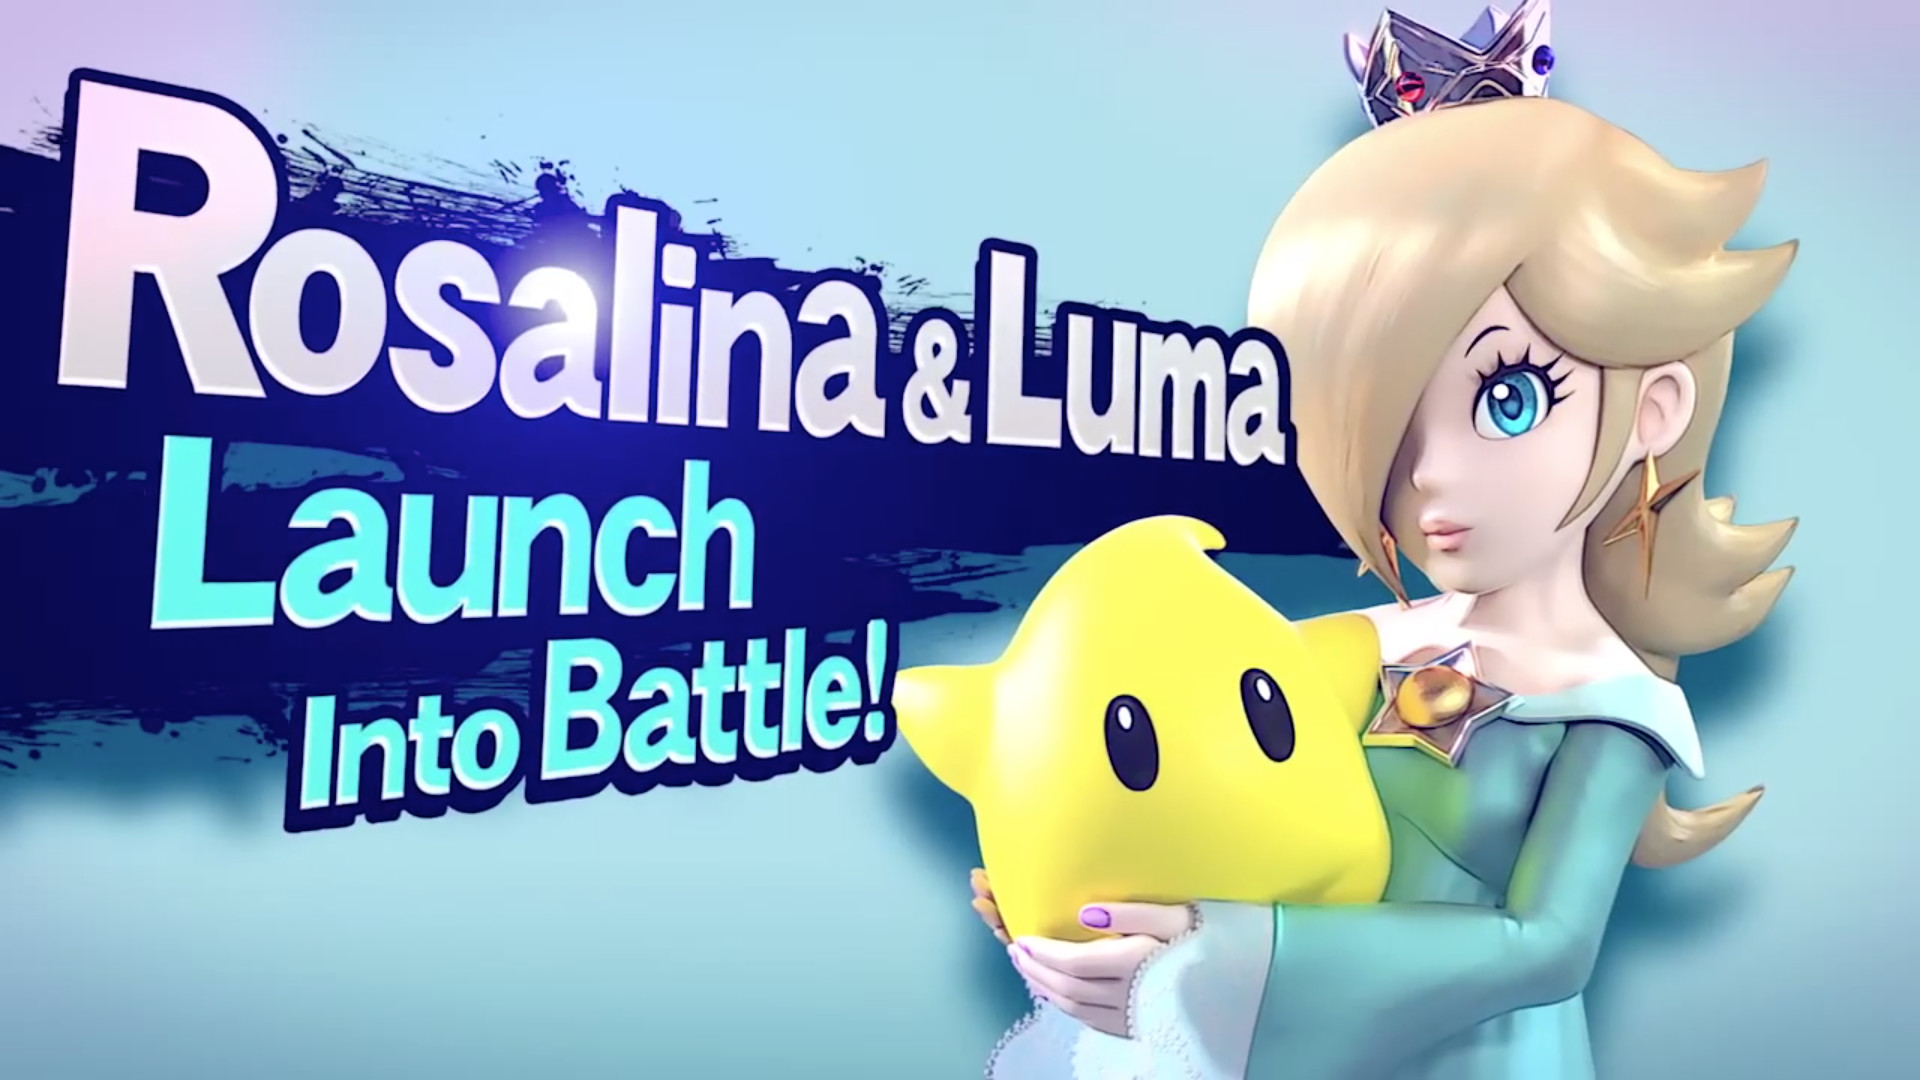 1920x1080 Rosalina & Luma join the battle! (Image: taken from Rosalina's Smash  trailer)